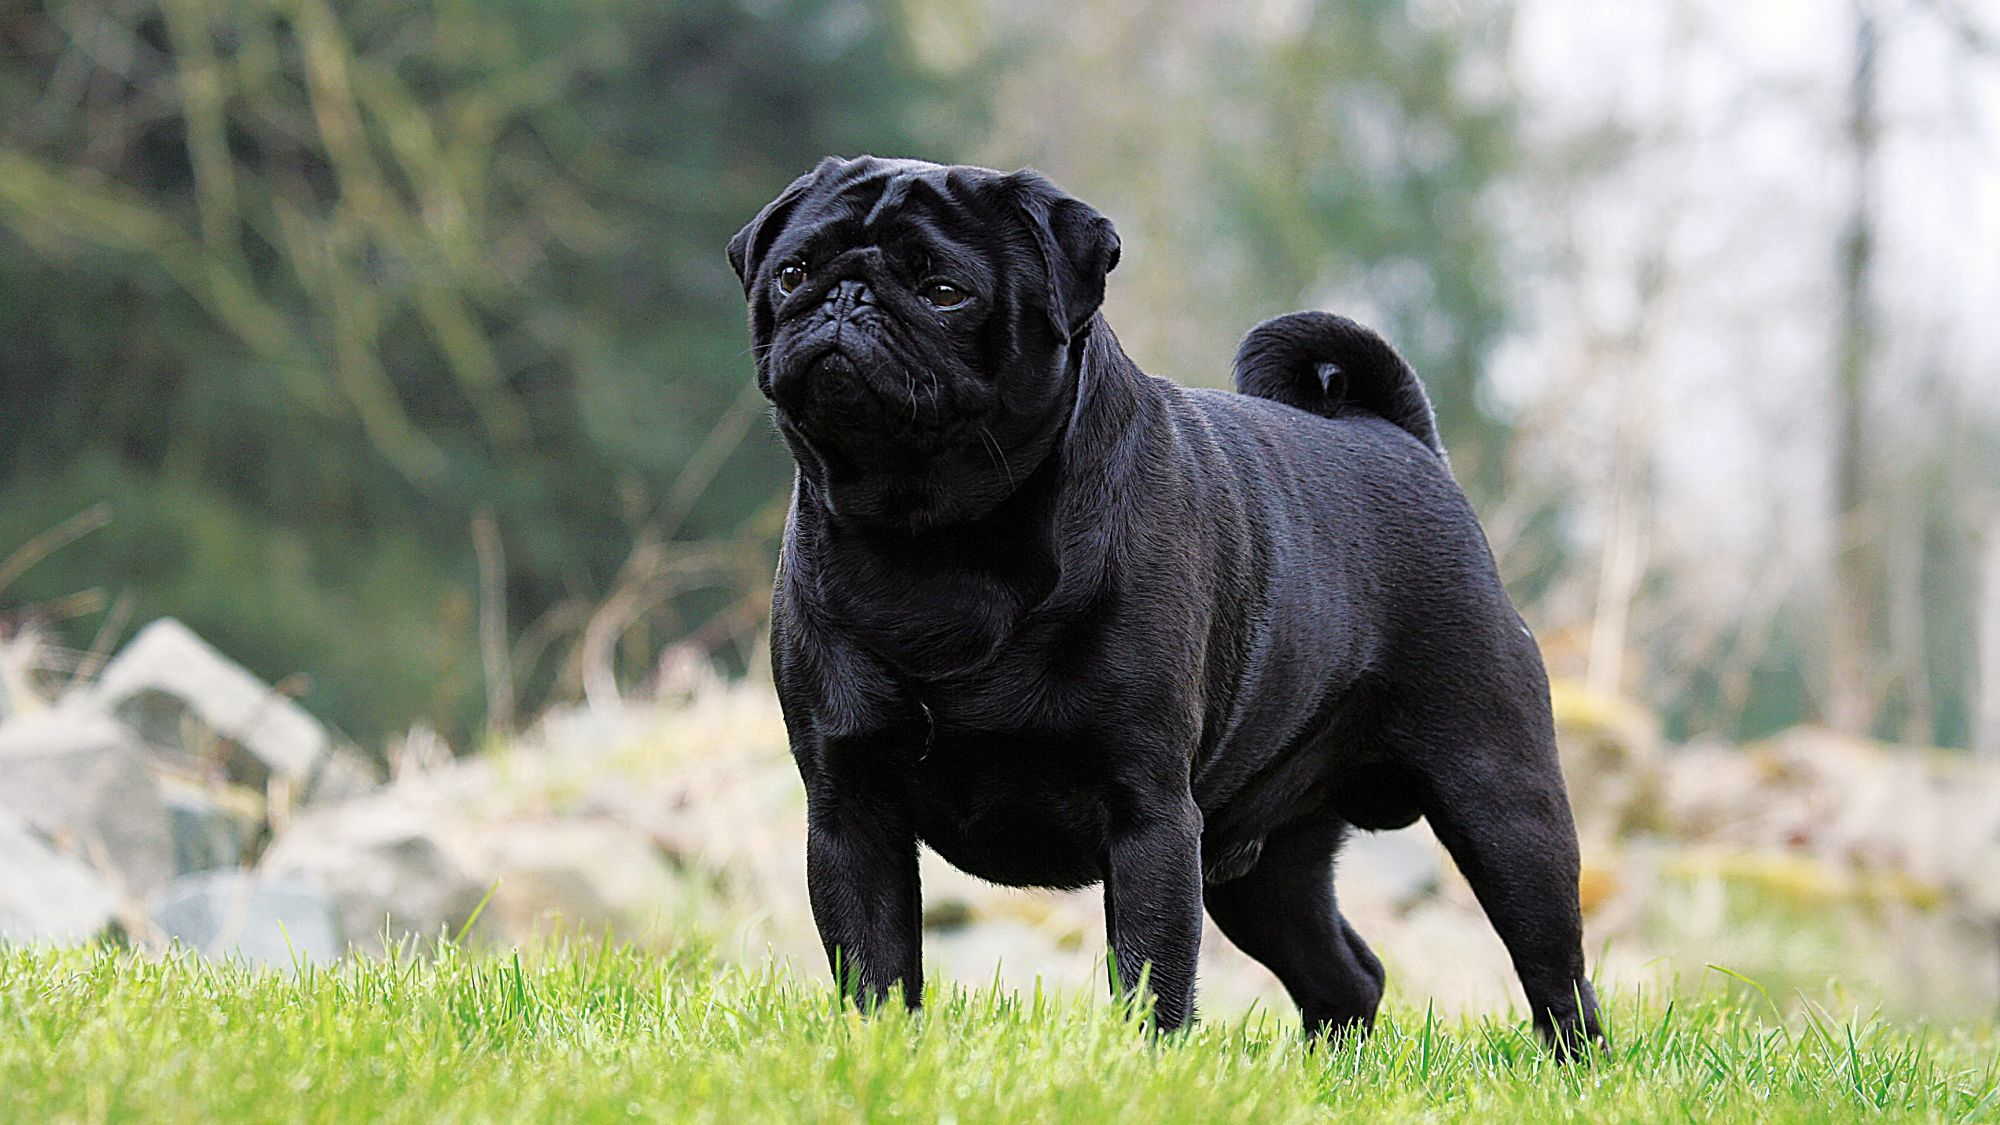 Black Pug standing on grass